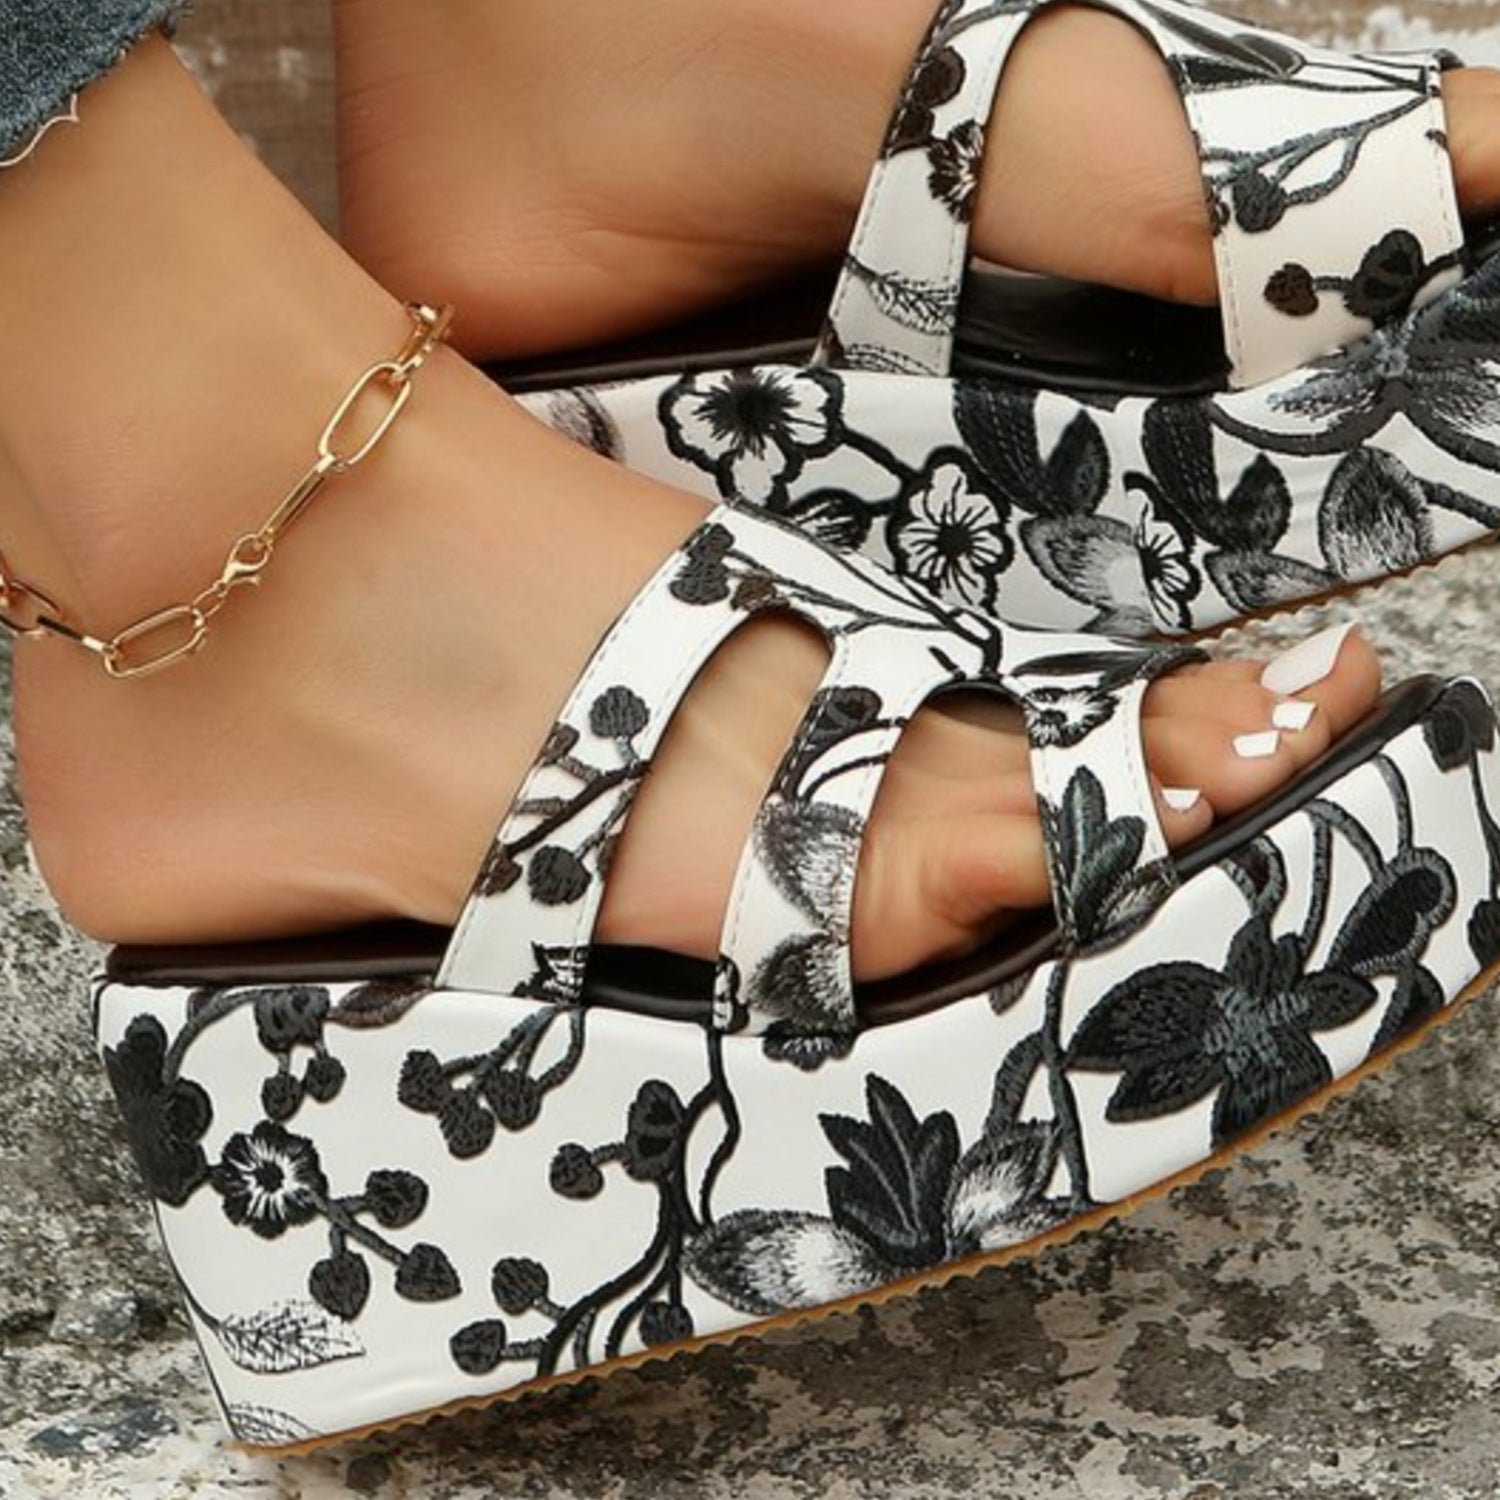 TEEK - Cutout Floral Peep Toe Sandals SHOES TEEK Trend   